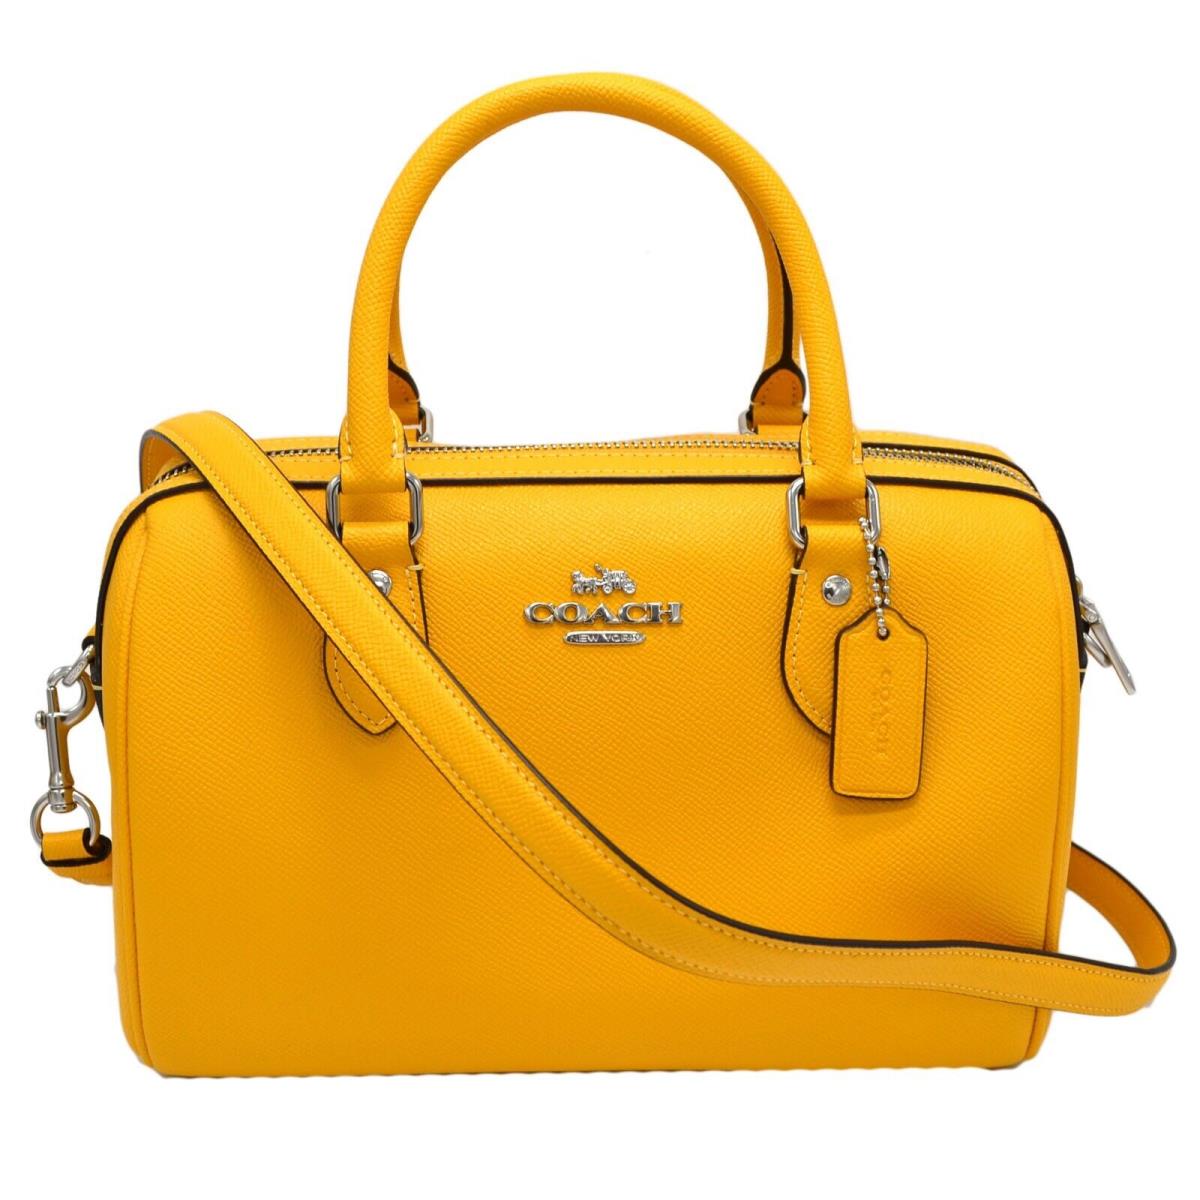 Coach Women`s Rowan Leather Satchel Purse Crossbody Handbag Shoulder Bag - Silver Hardware, Yellow Exterior